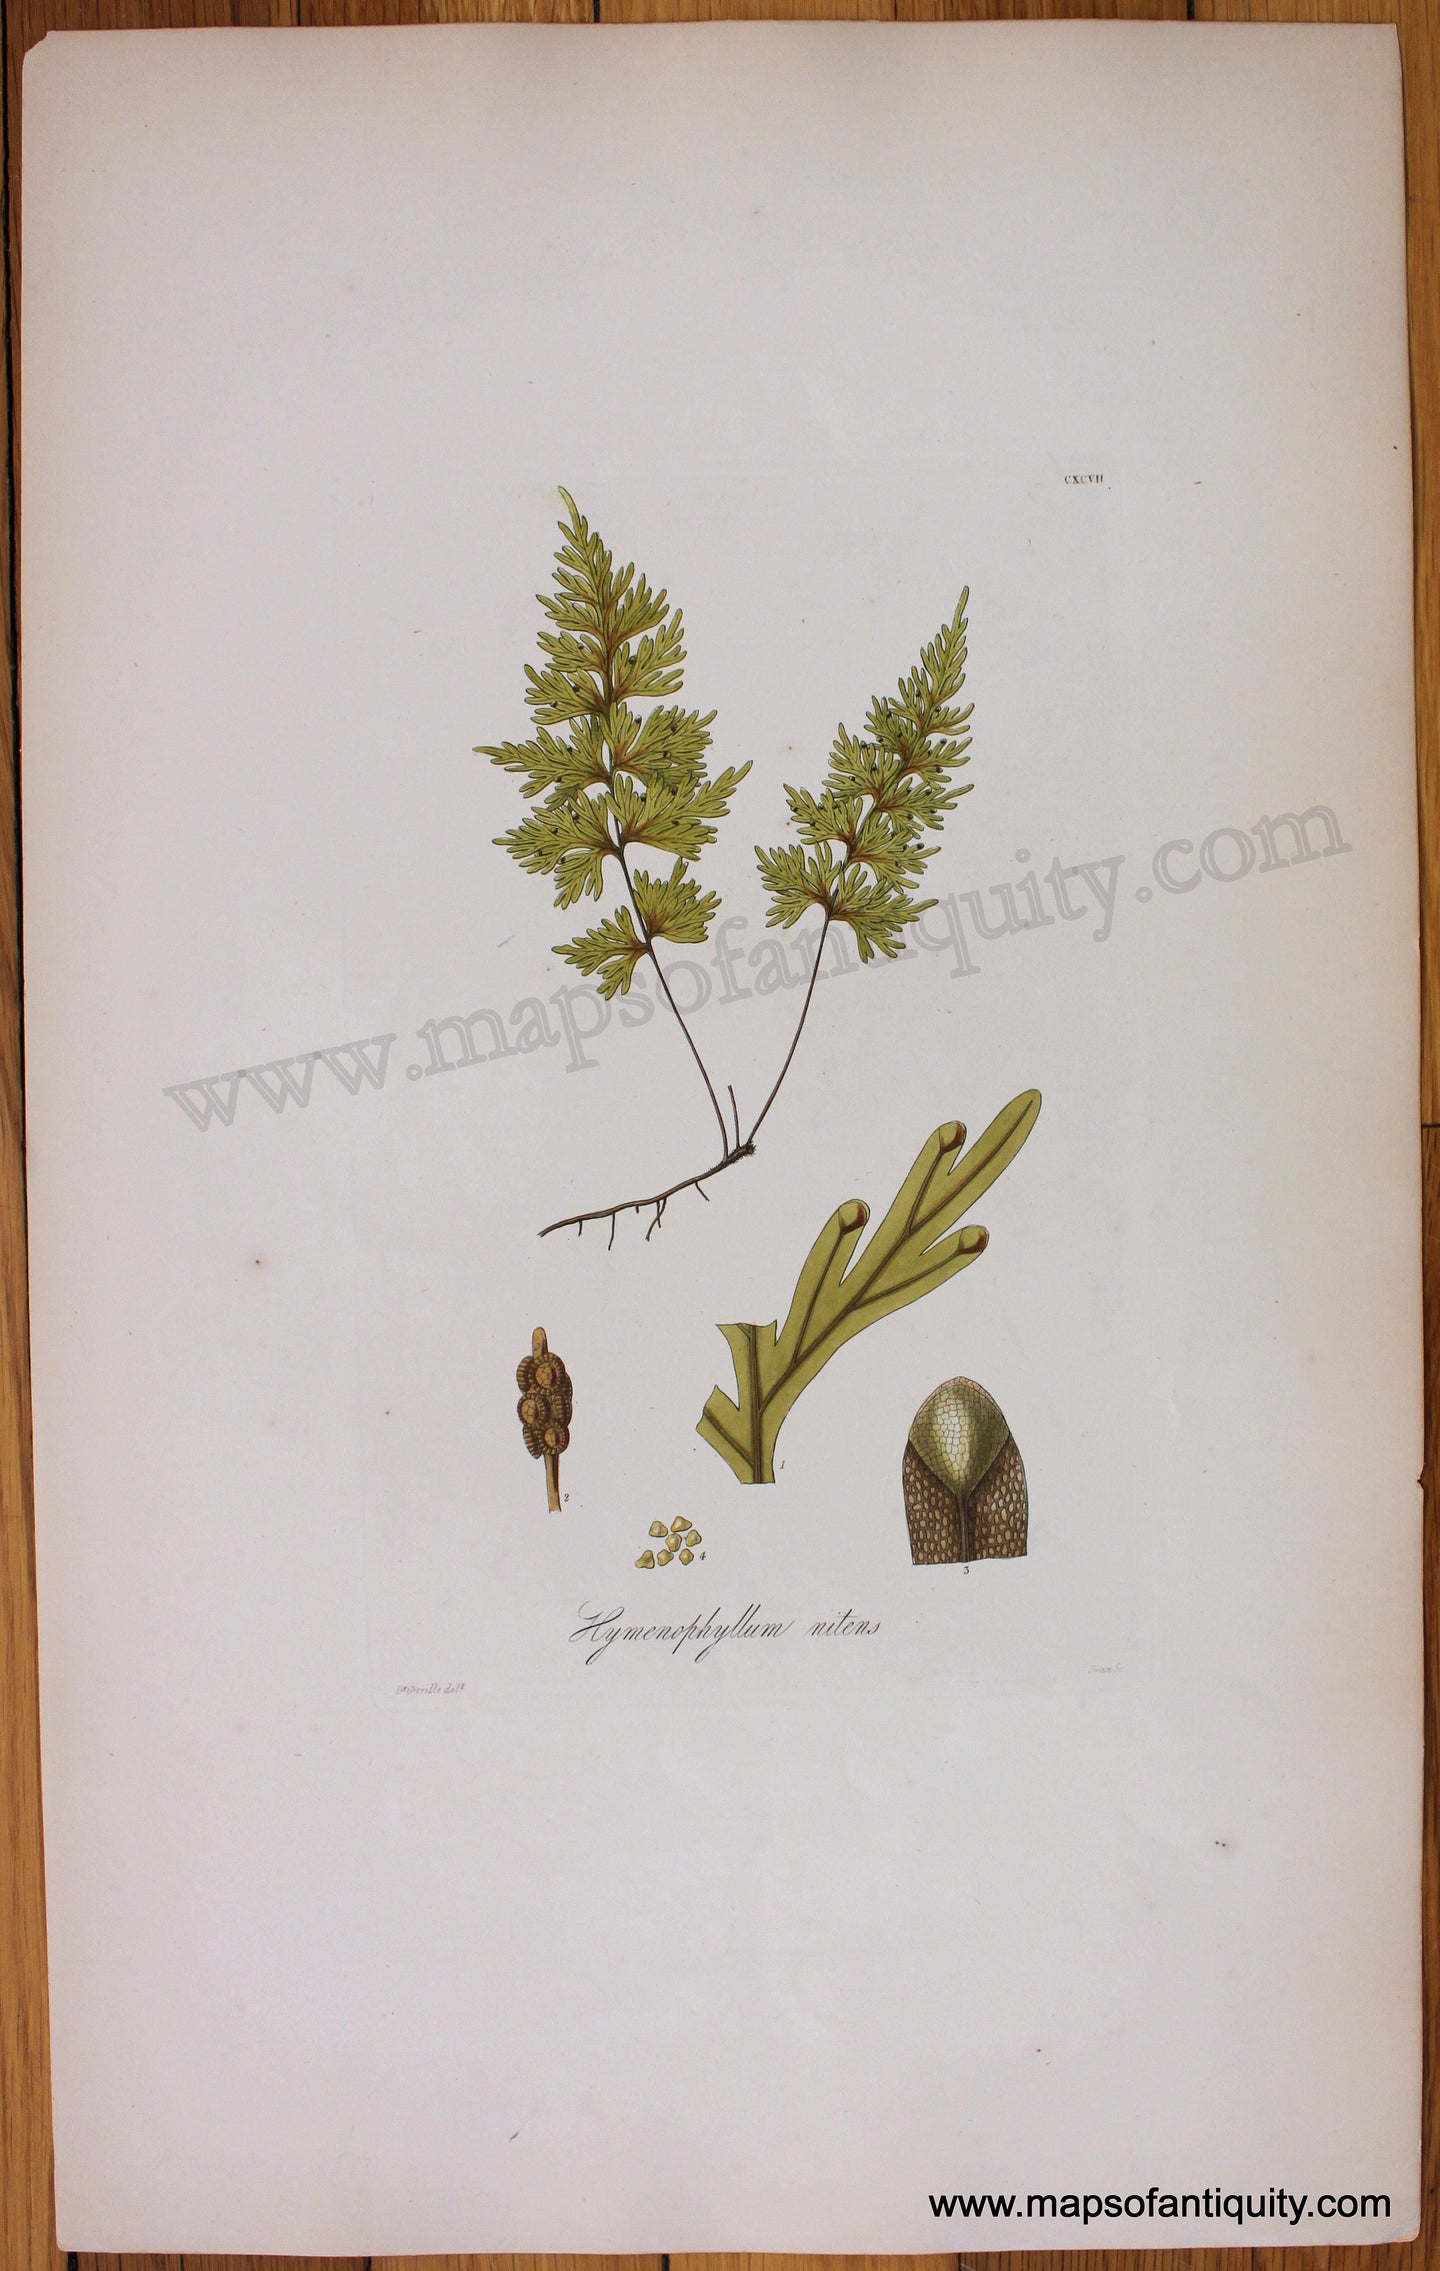 Antique-Botanical-Print-Hymenophyllum-nitens-1831-Hooker-Botanical--1800s-19th-century-Maps-of-Antiquity